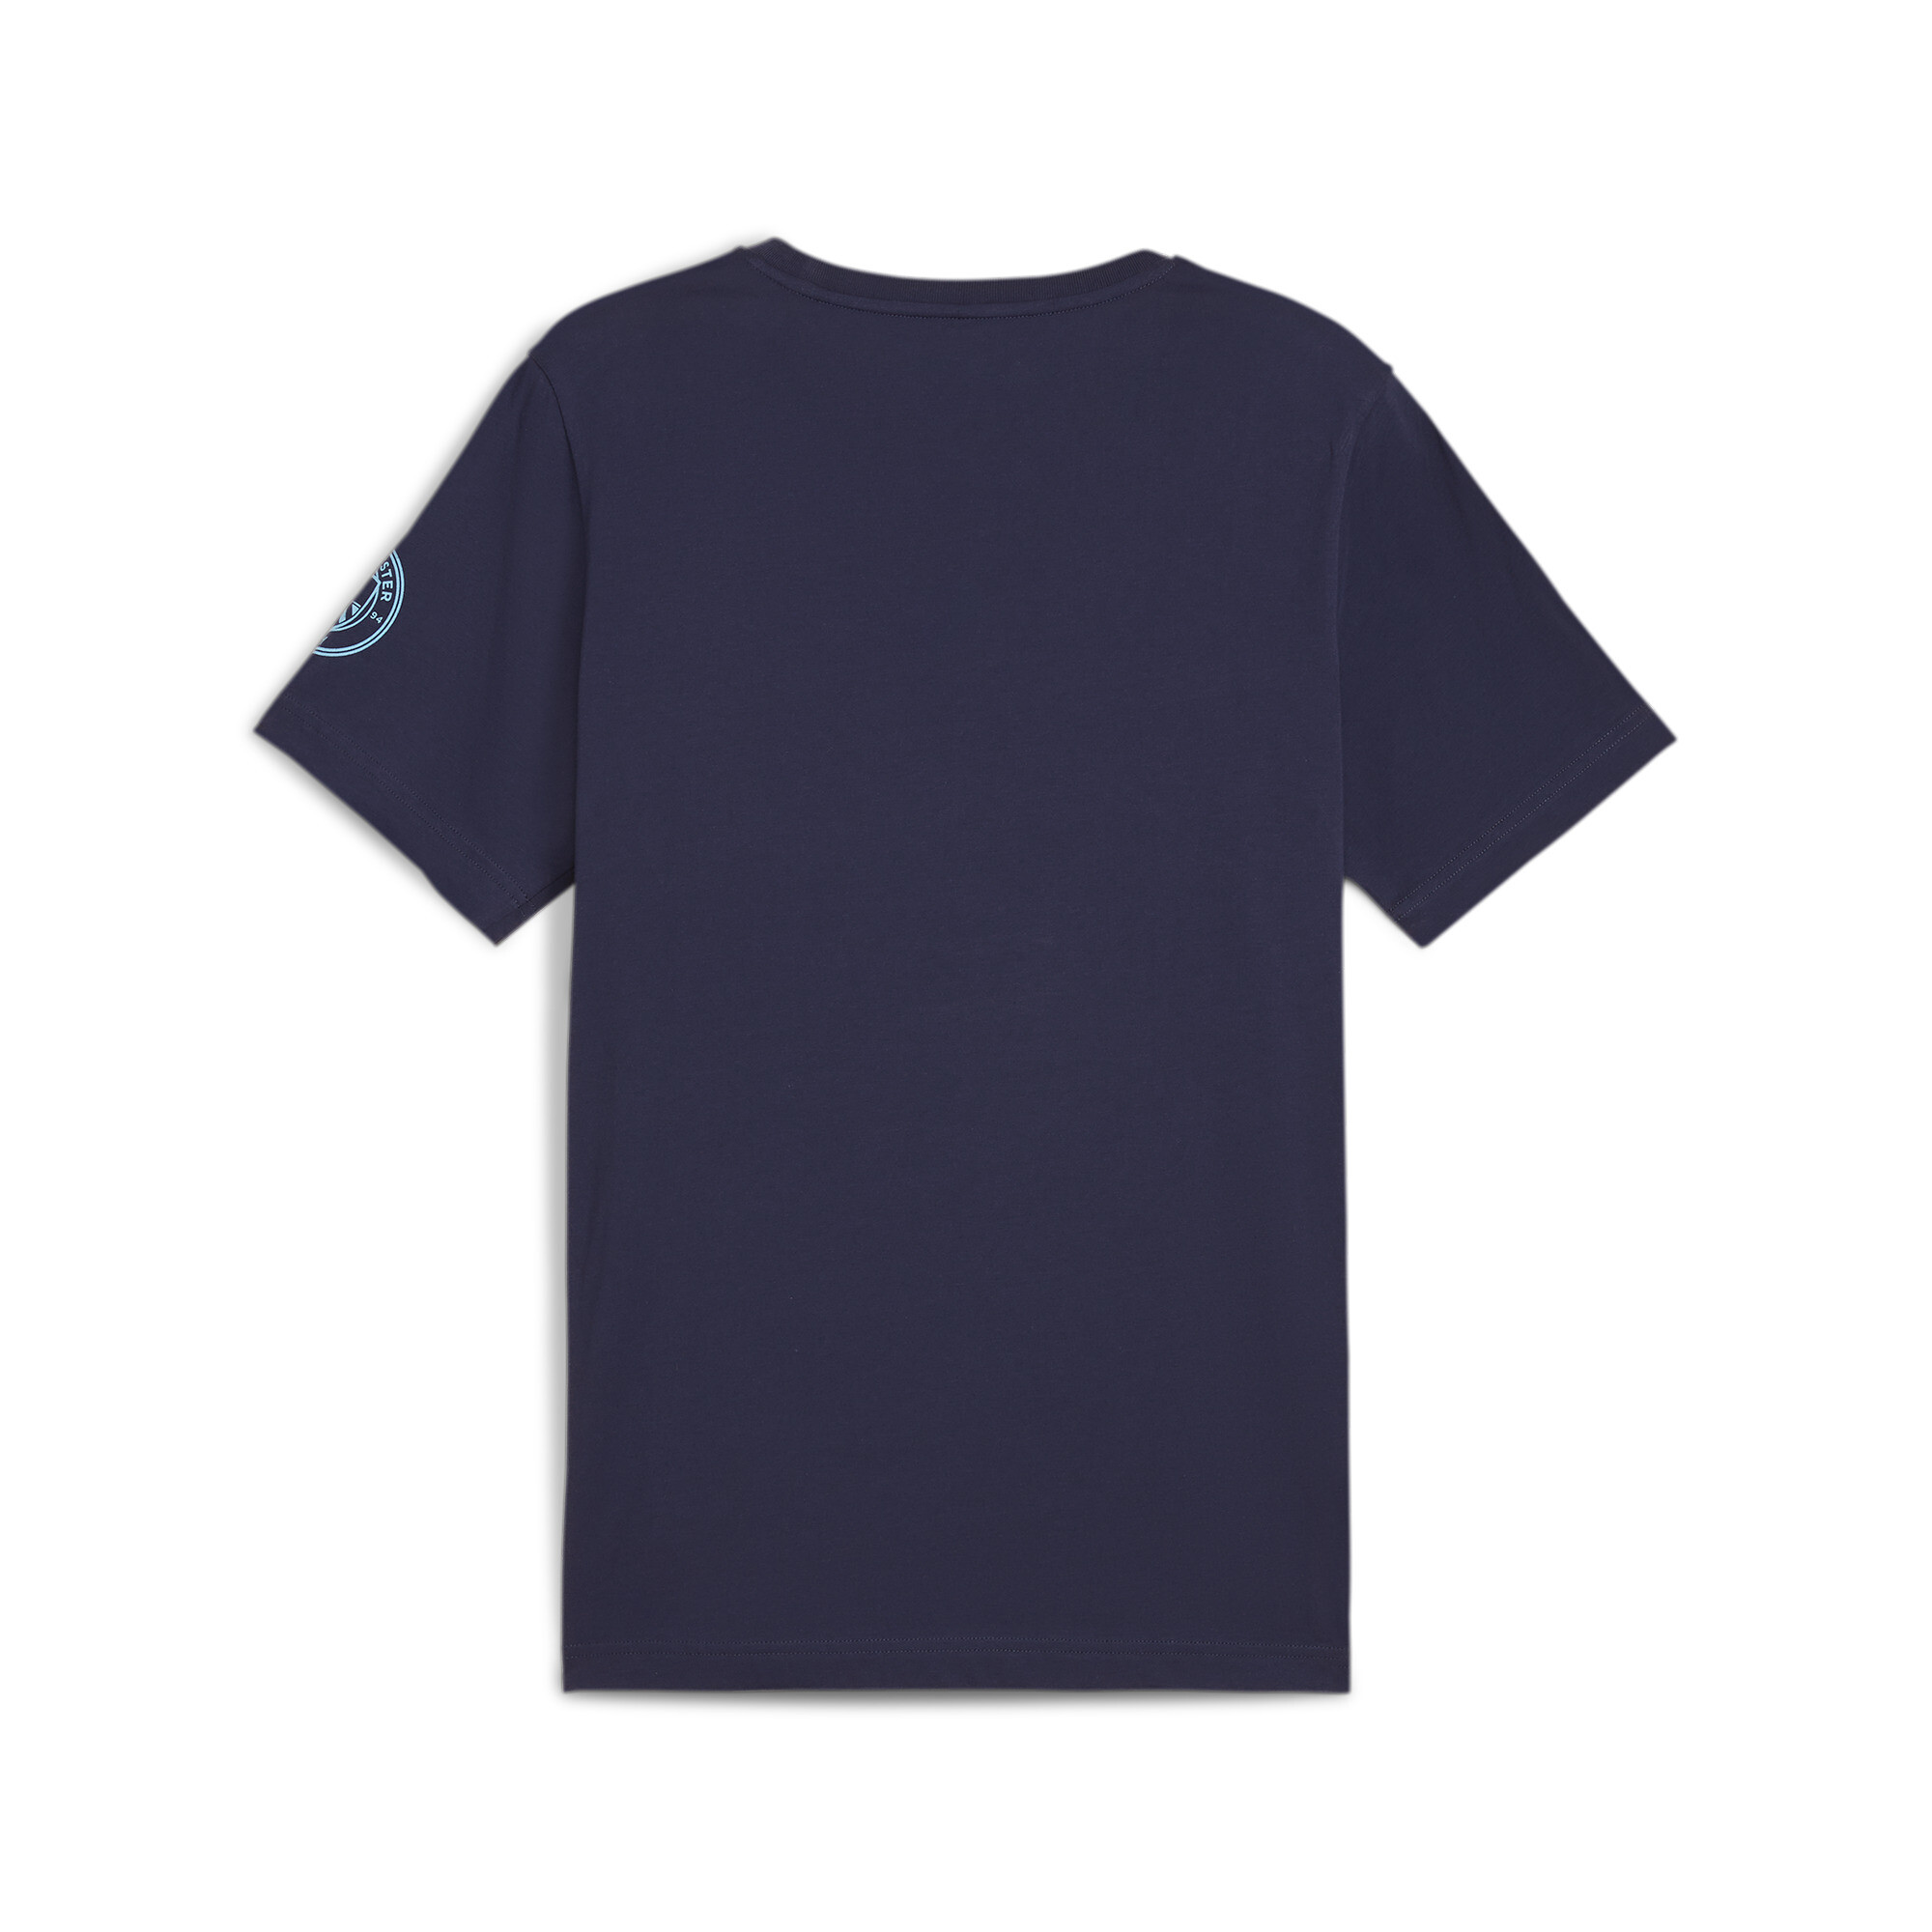 Men's PUMA Manchester City Ftblicons T-Shirt In Blue, Size Medium